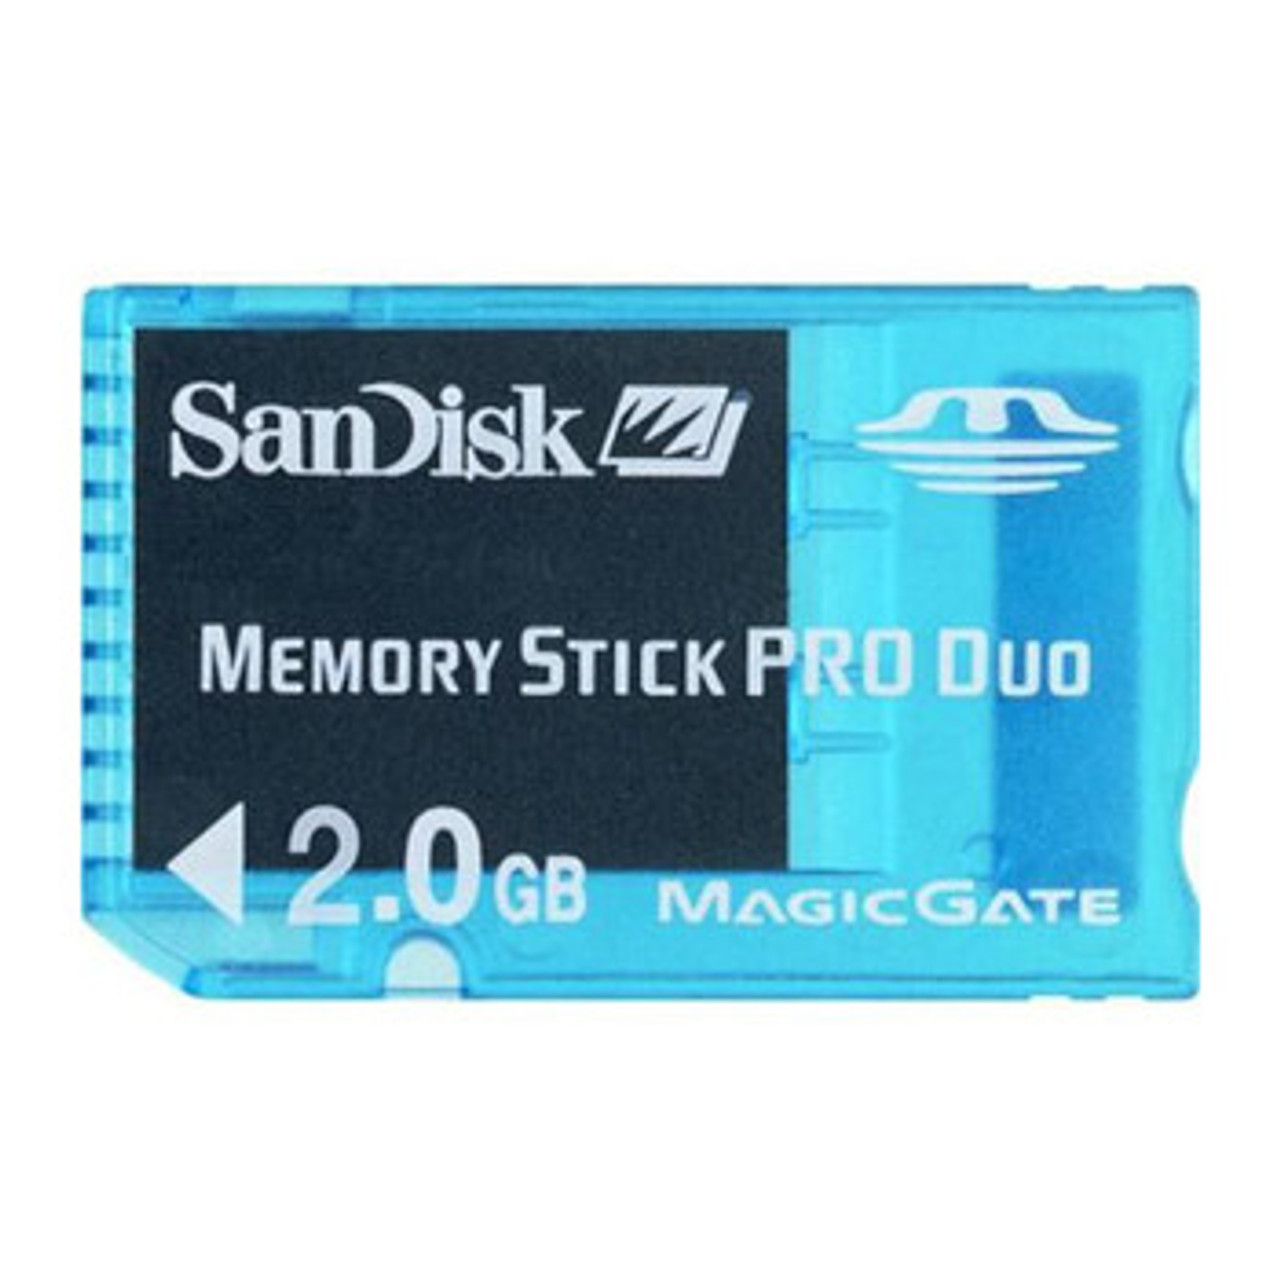 SDMSG-2048-E11 | Sandisk | 2Gb Pro Duo Gaming Memory Stick